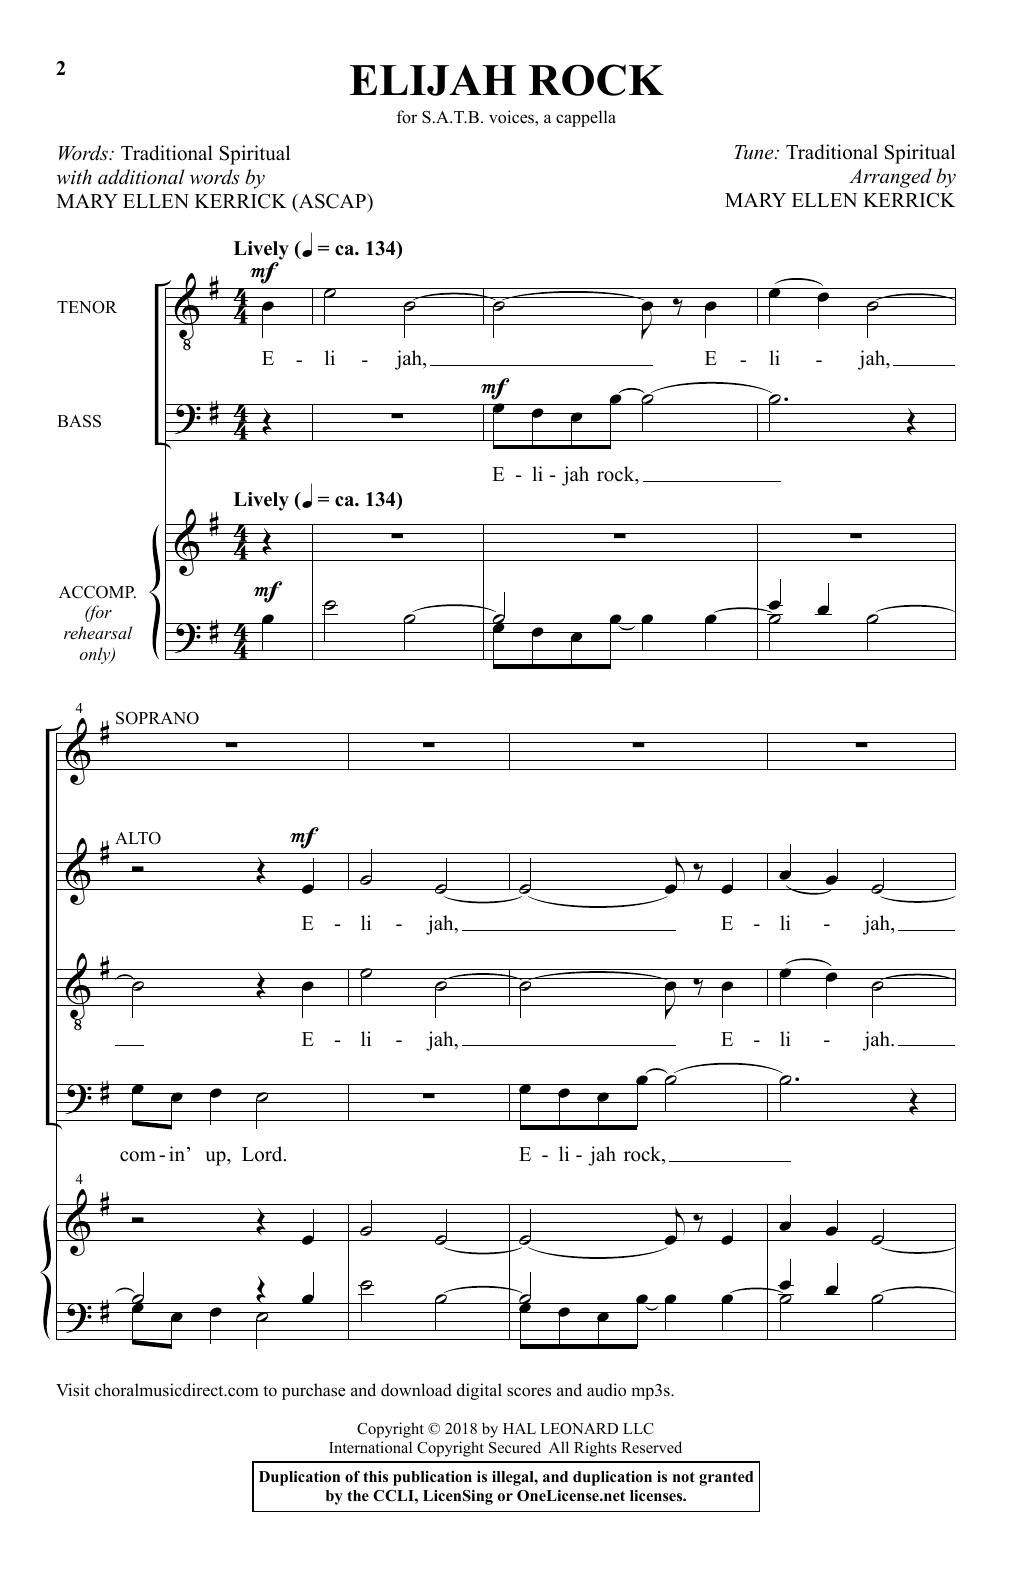 Mary Ellen Kerrick Elijah Rock Sheet Music Notes & Chords for SATB - Download or Print PDF